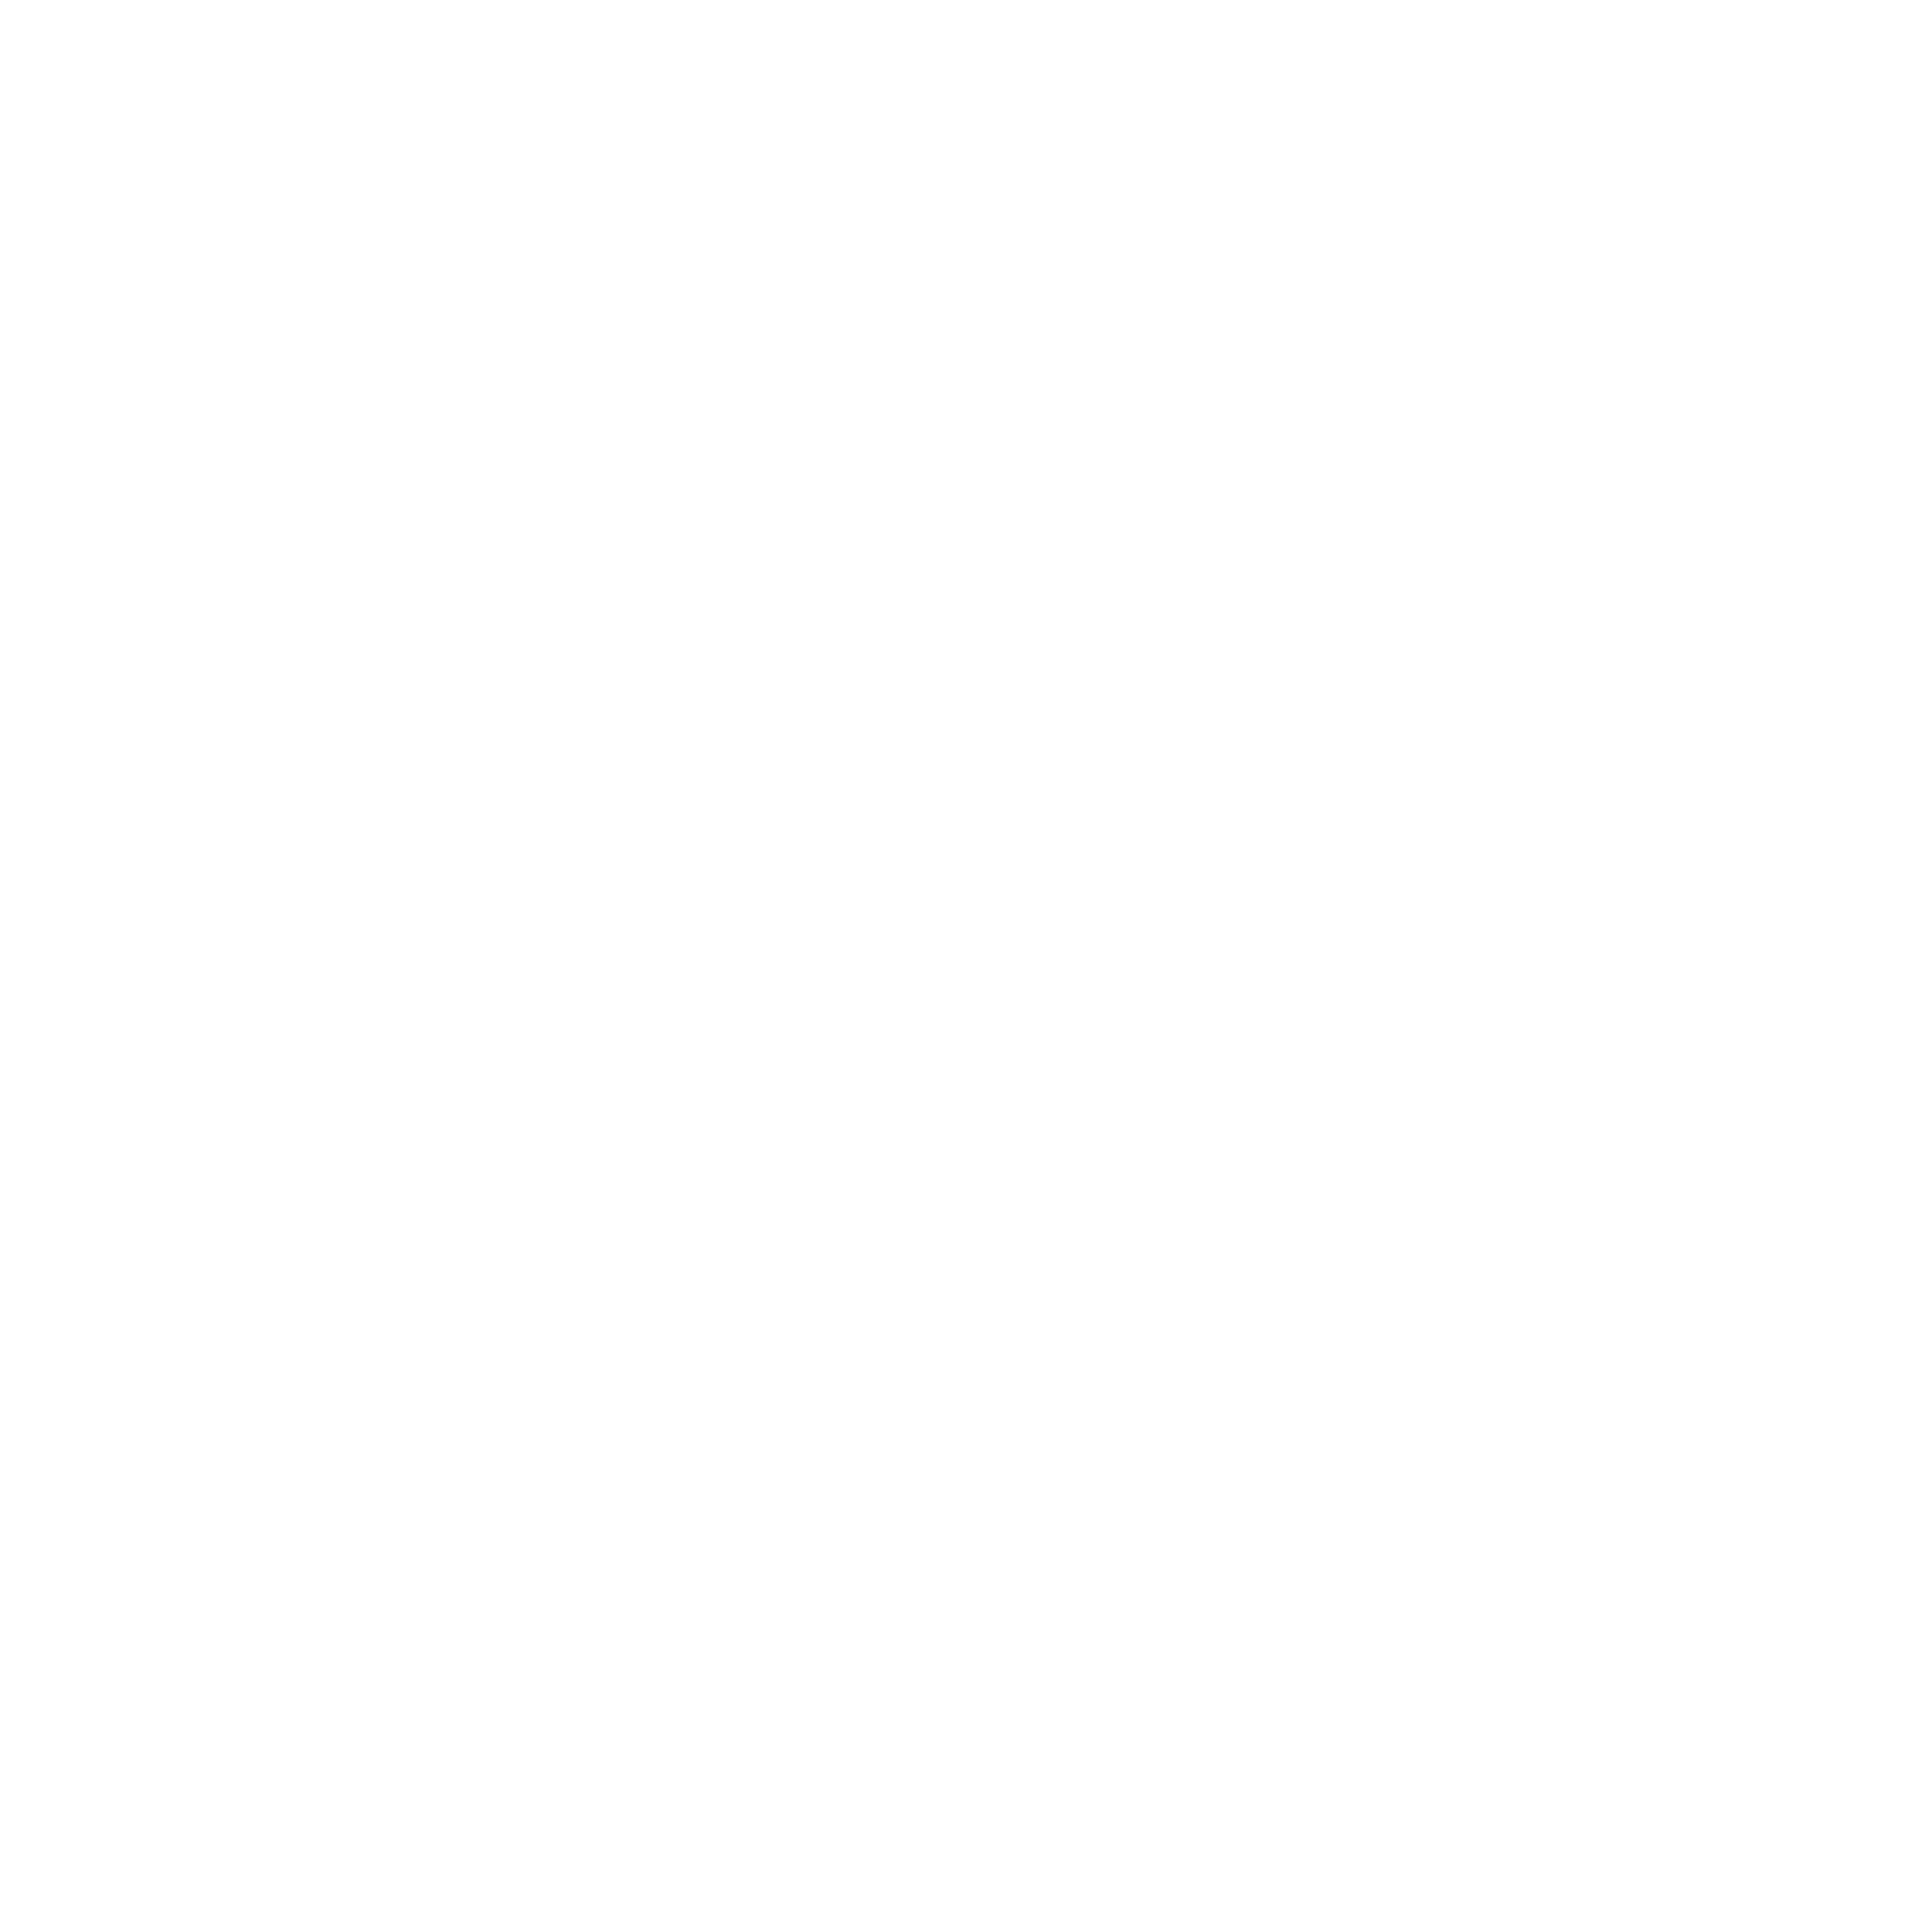 TRW Logo - TRW Logo PNG Transparent & SVG Vector - Freebie Supply